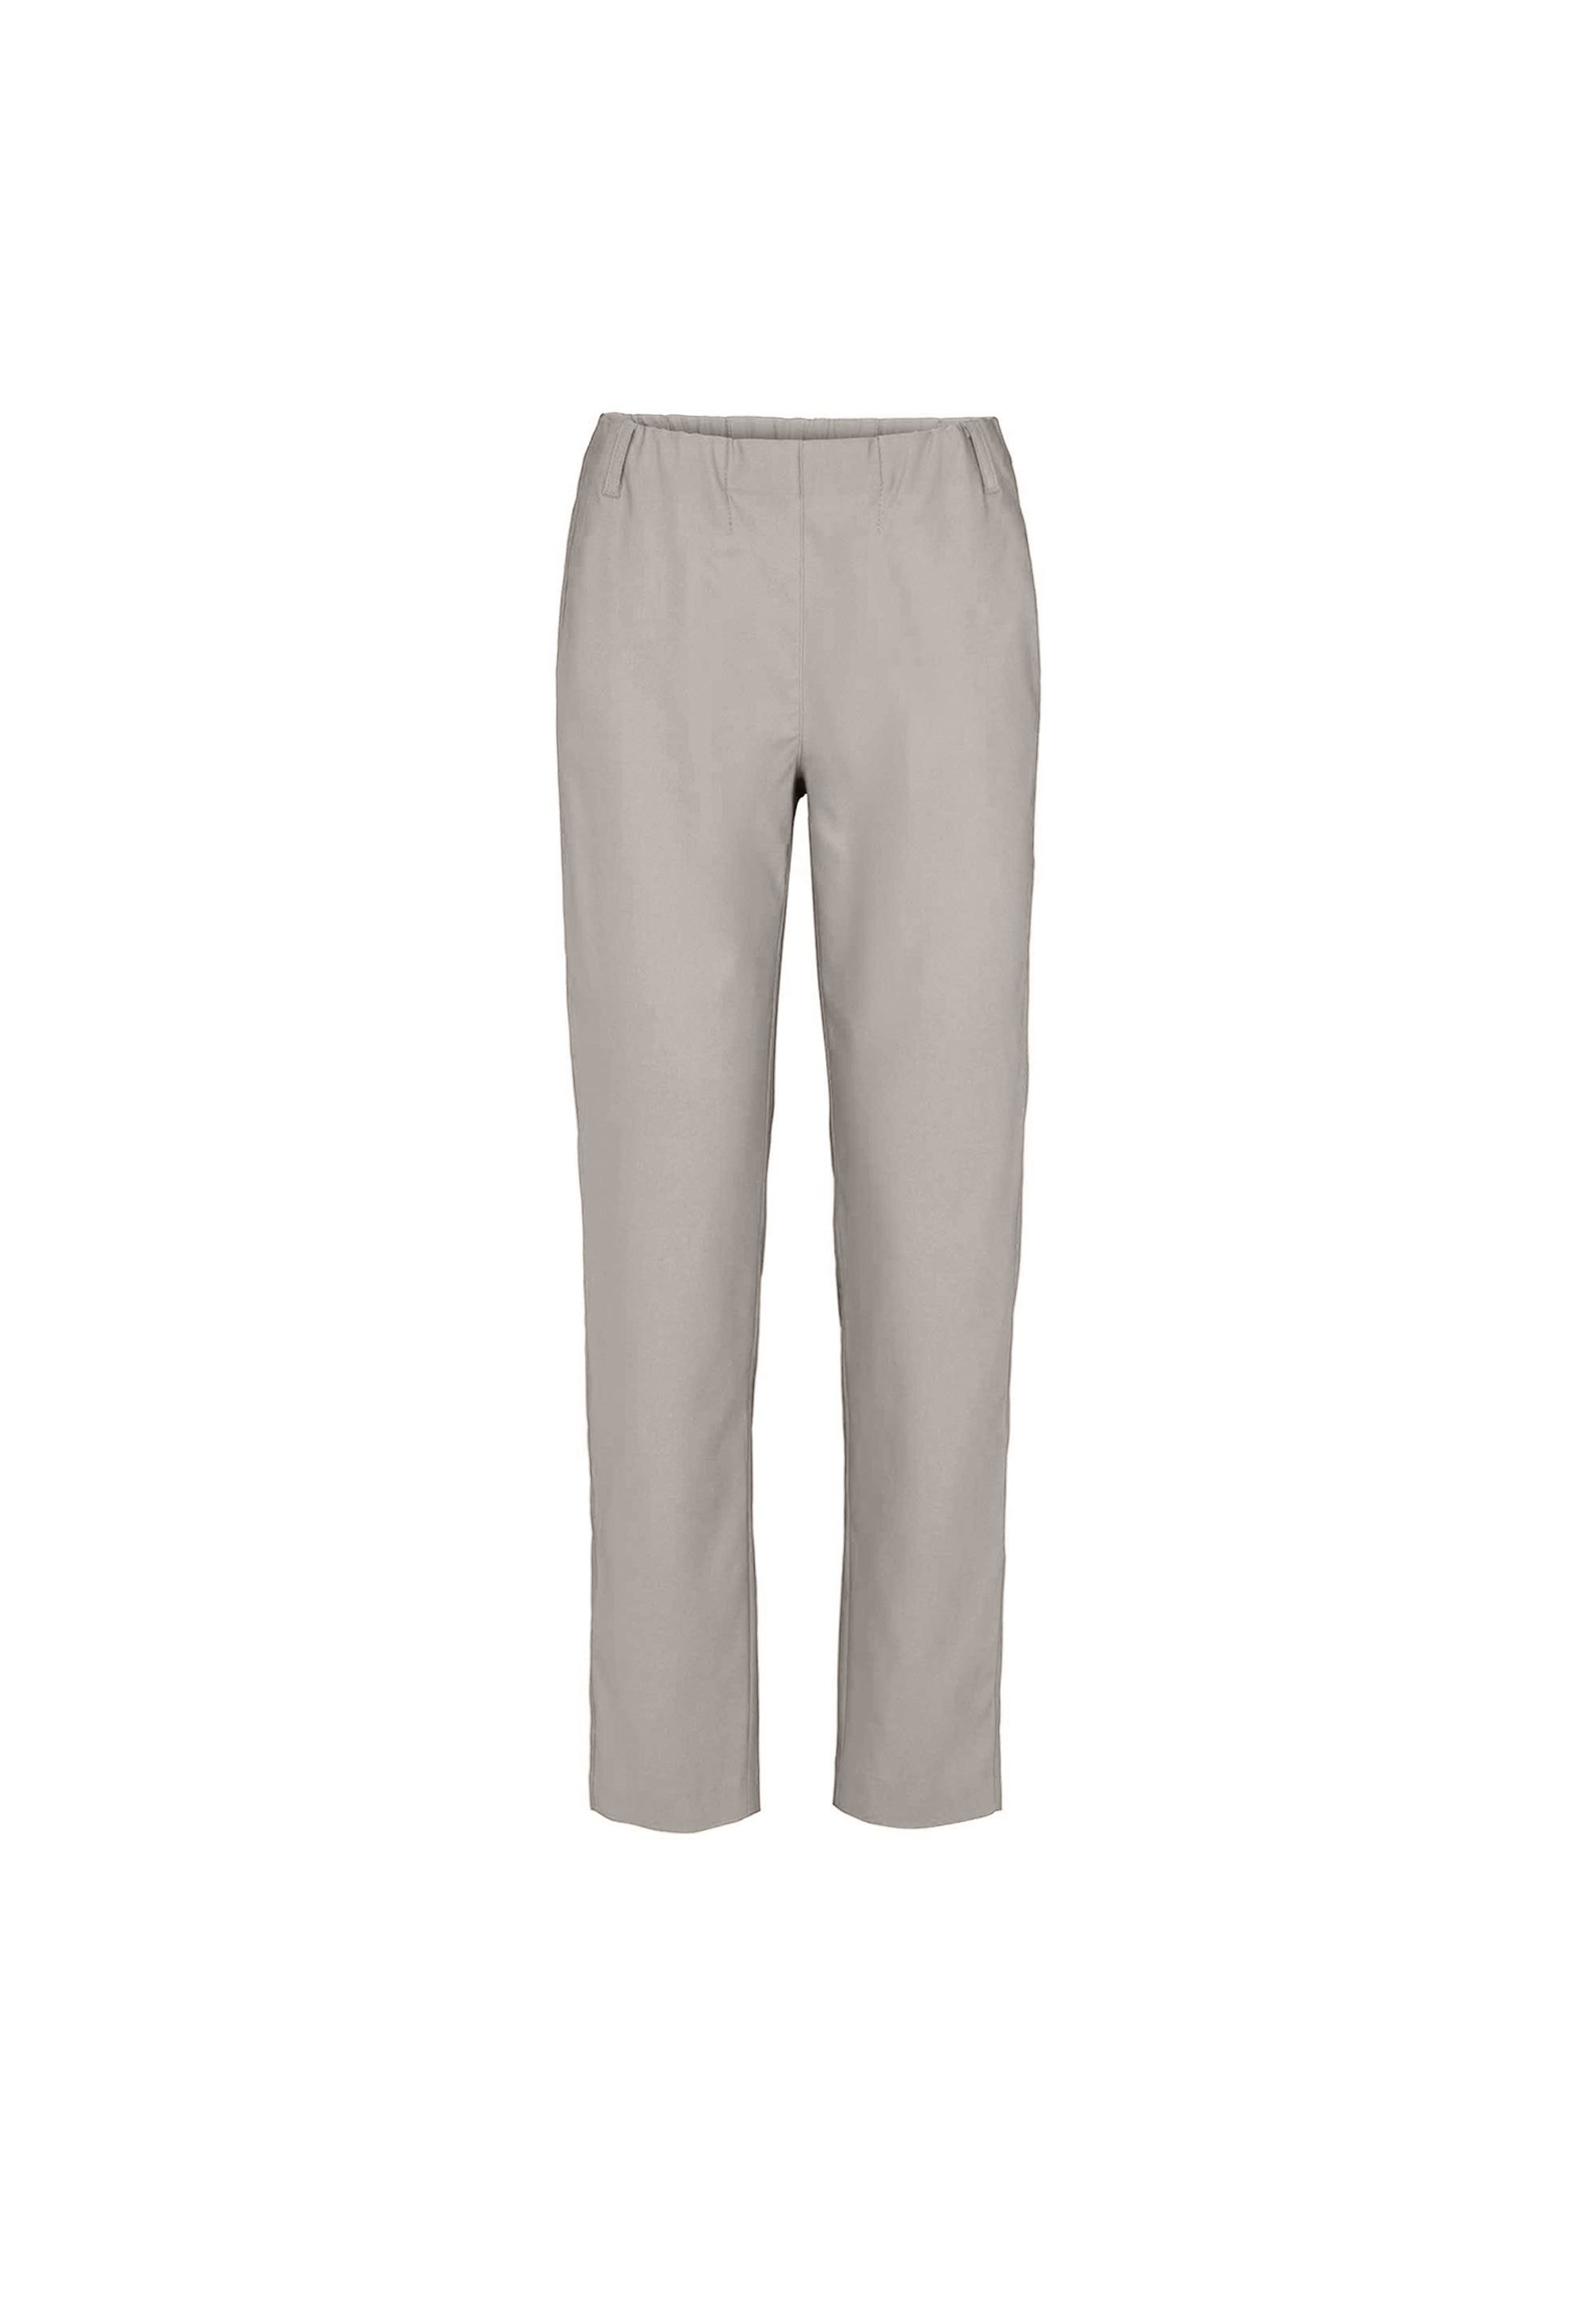 LAURIE Taylor Regular - Medium Length Trousers REGULAR Grau sand